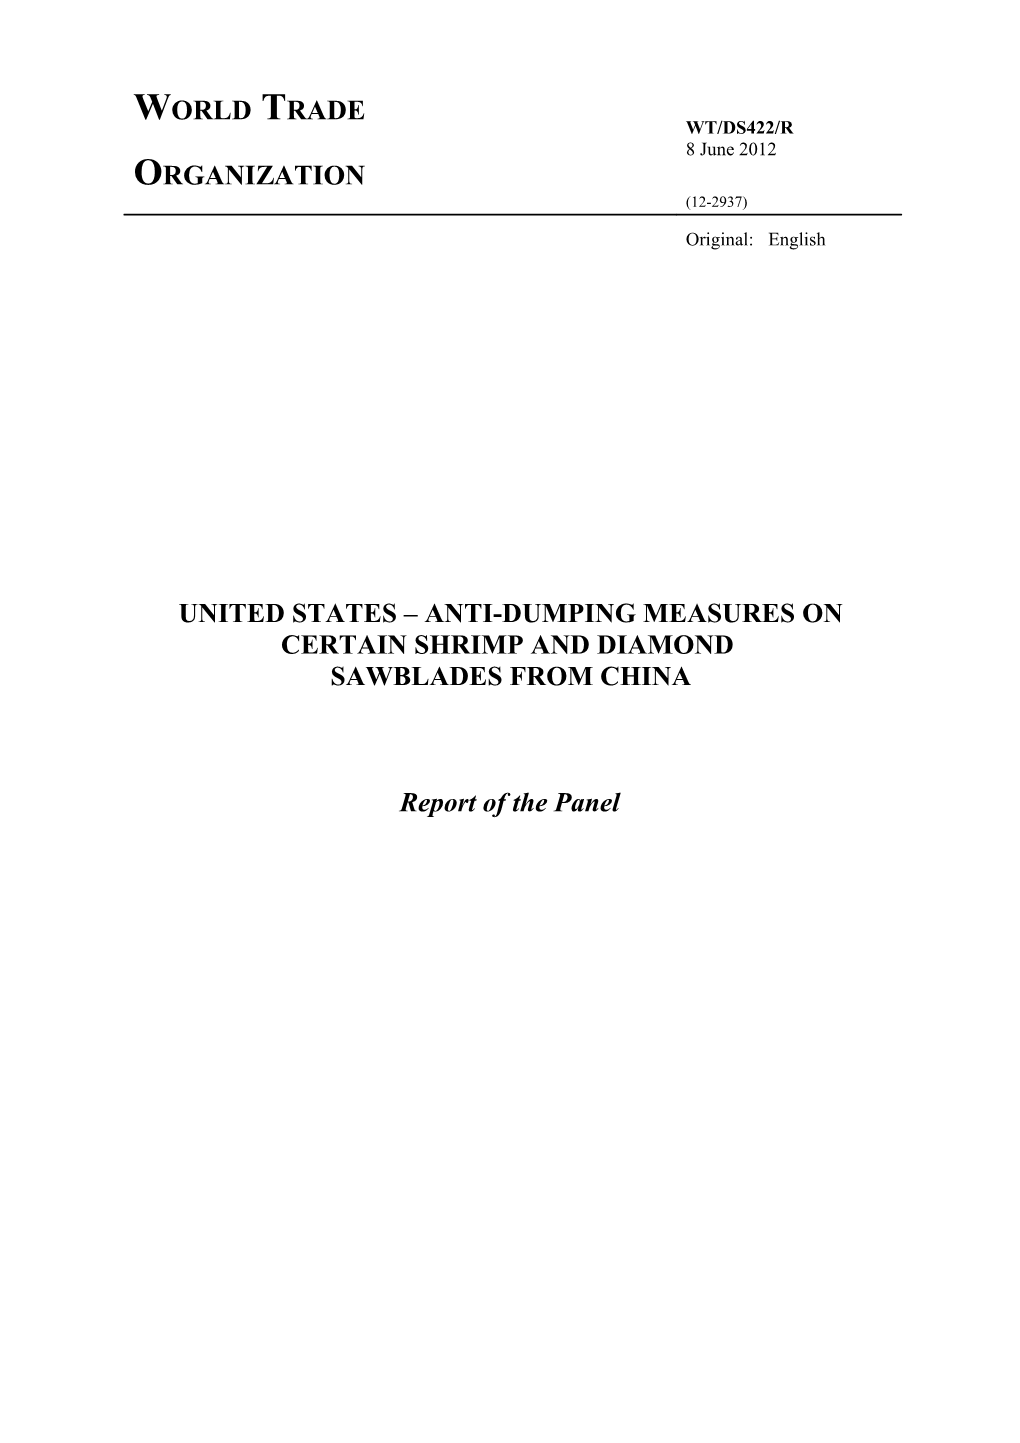 United States Anti-Dumping Measures on Certain Shrimp and Diamond